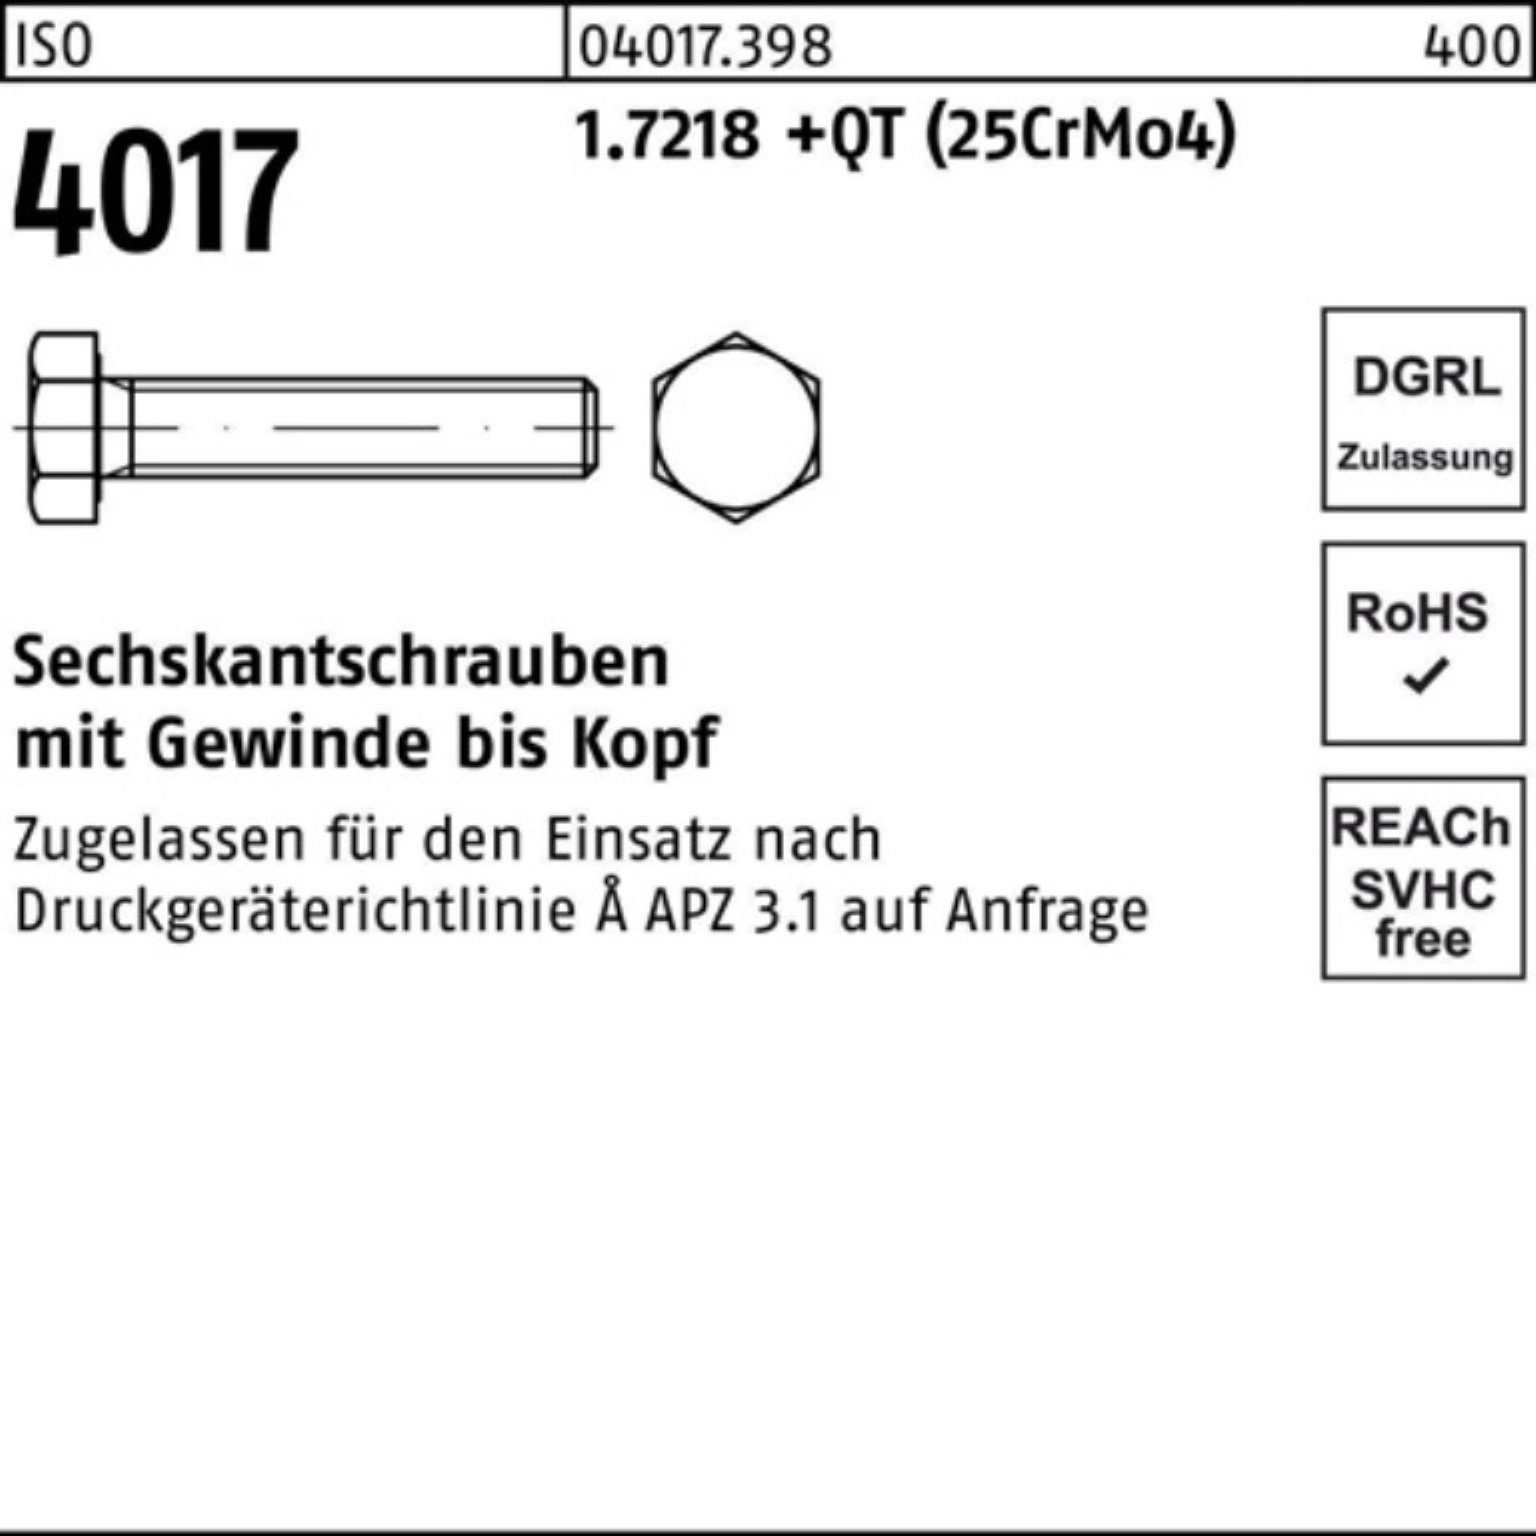 Pack VG (25CrMo4) 1.7218 Sechskantschraube 4017 Sechskantschraube +QT M30x Bufab 100 ISO 100er